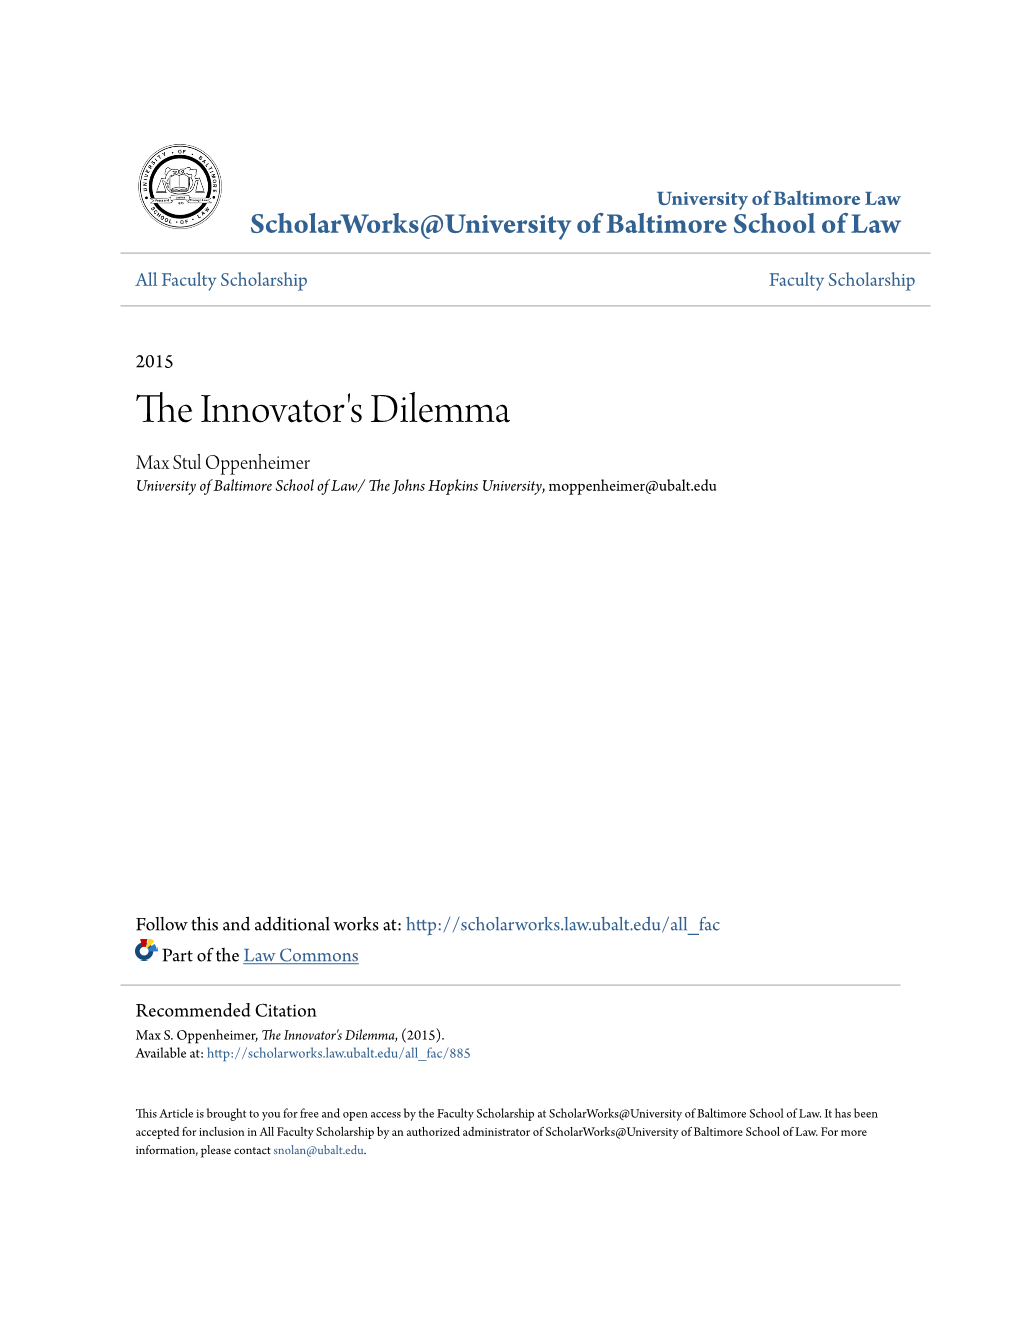 The Innovator's Dilemma, (2015)